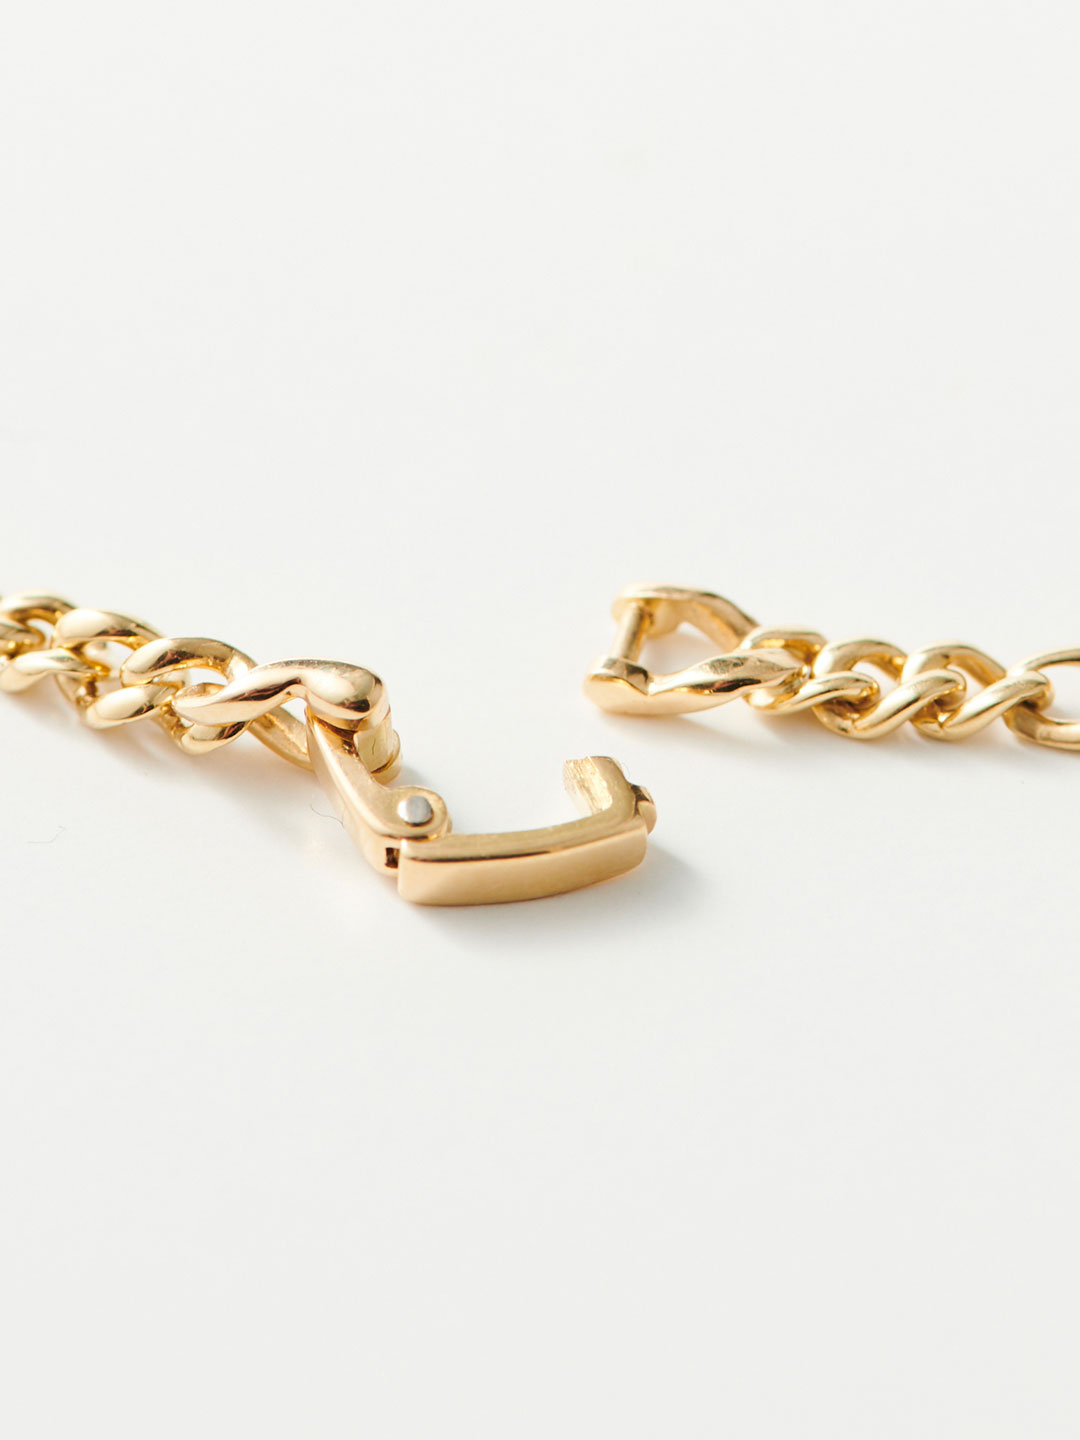 Long & Short Necklace 51cm / L&S 1:3 - Yellow Gold